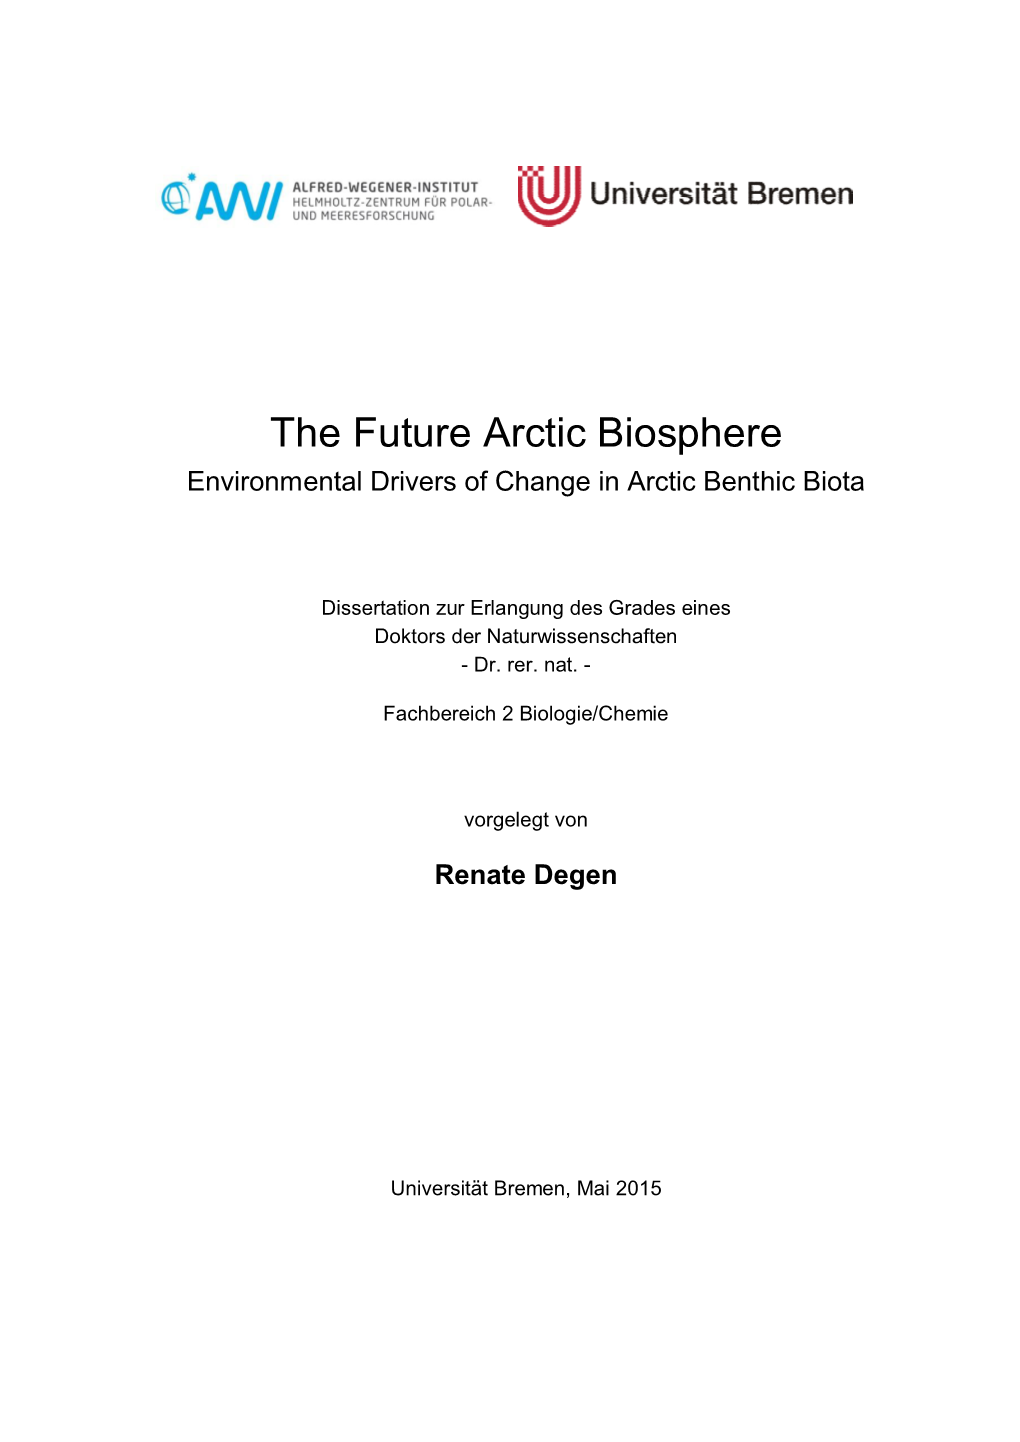 The Future Arctic Biosphere Environmental Drivers of Change in Arctic Benthic Biota